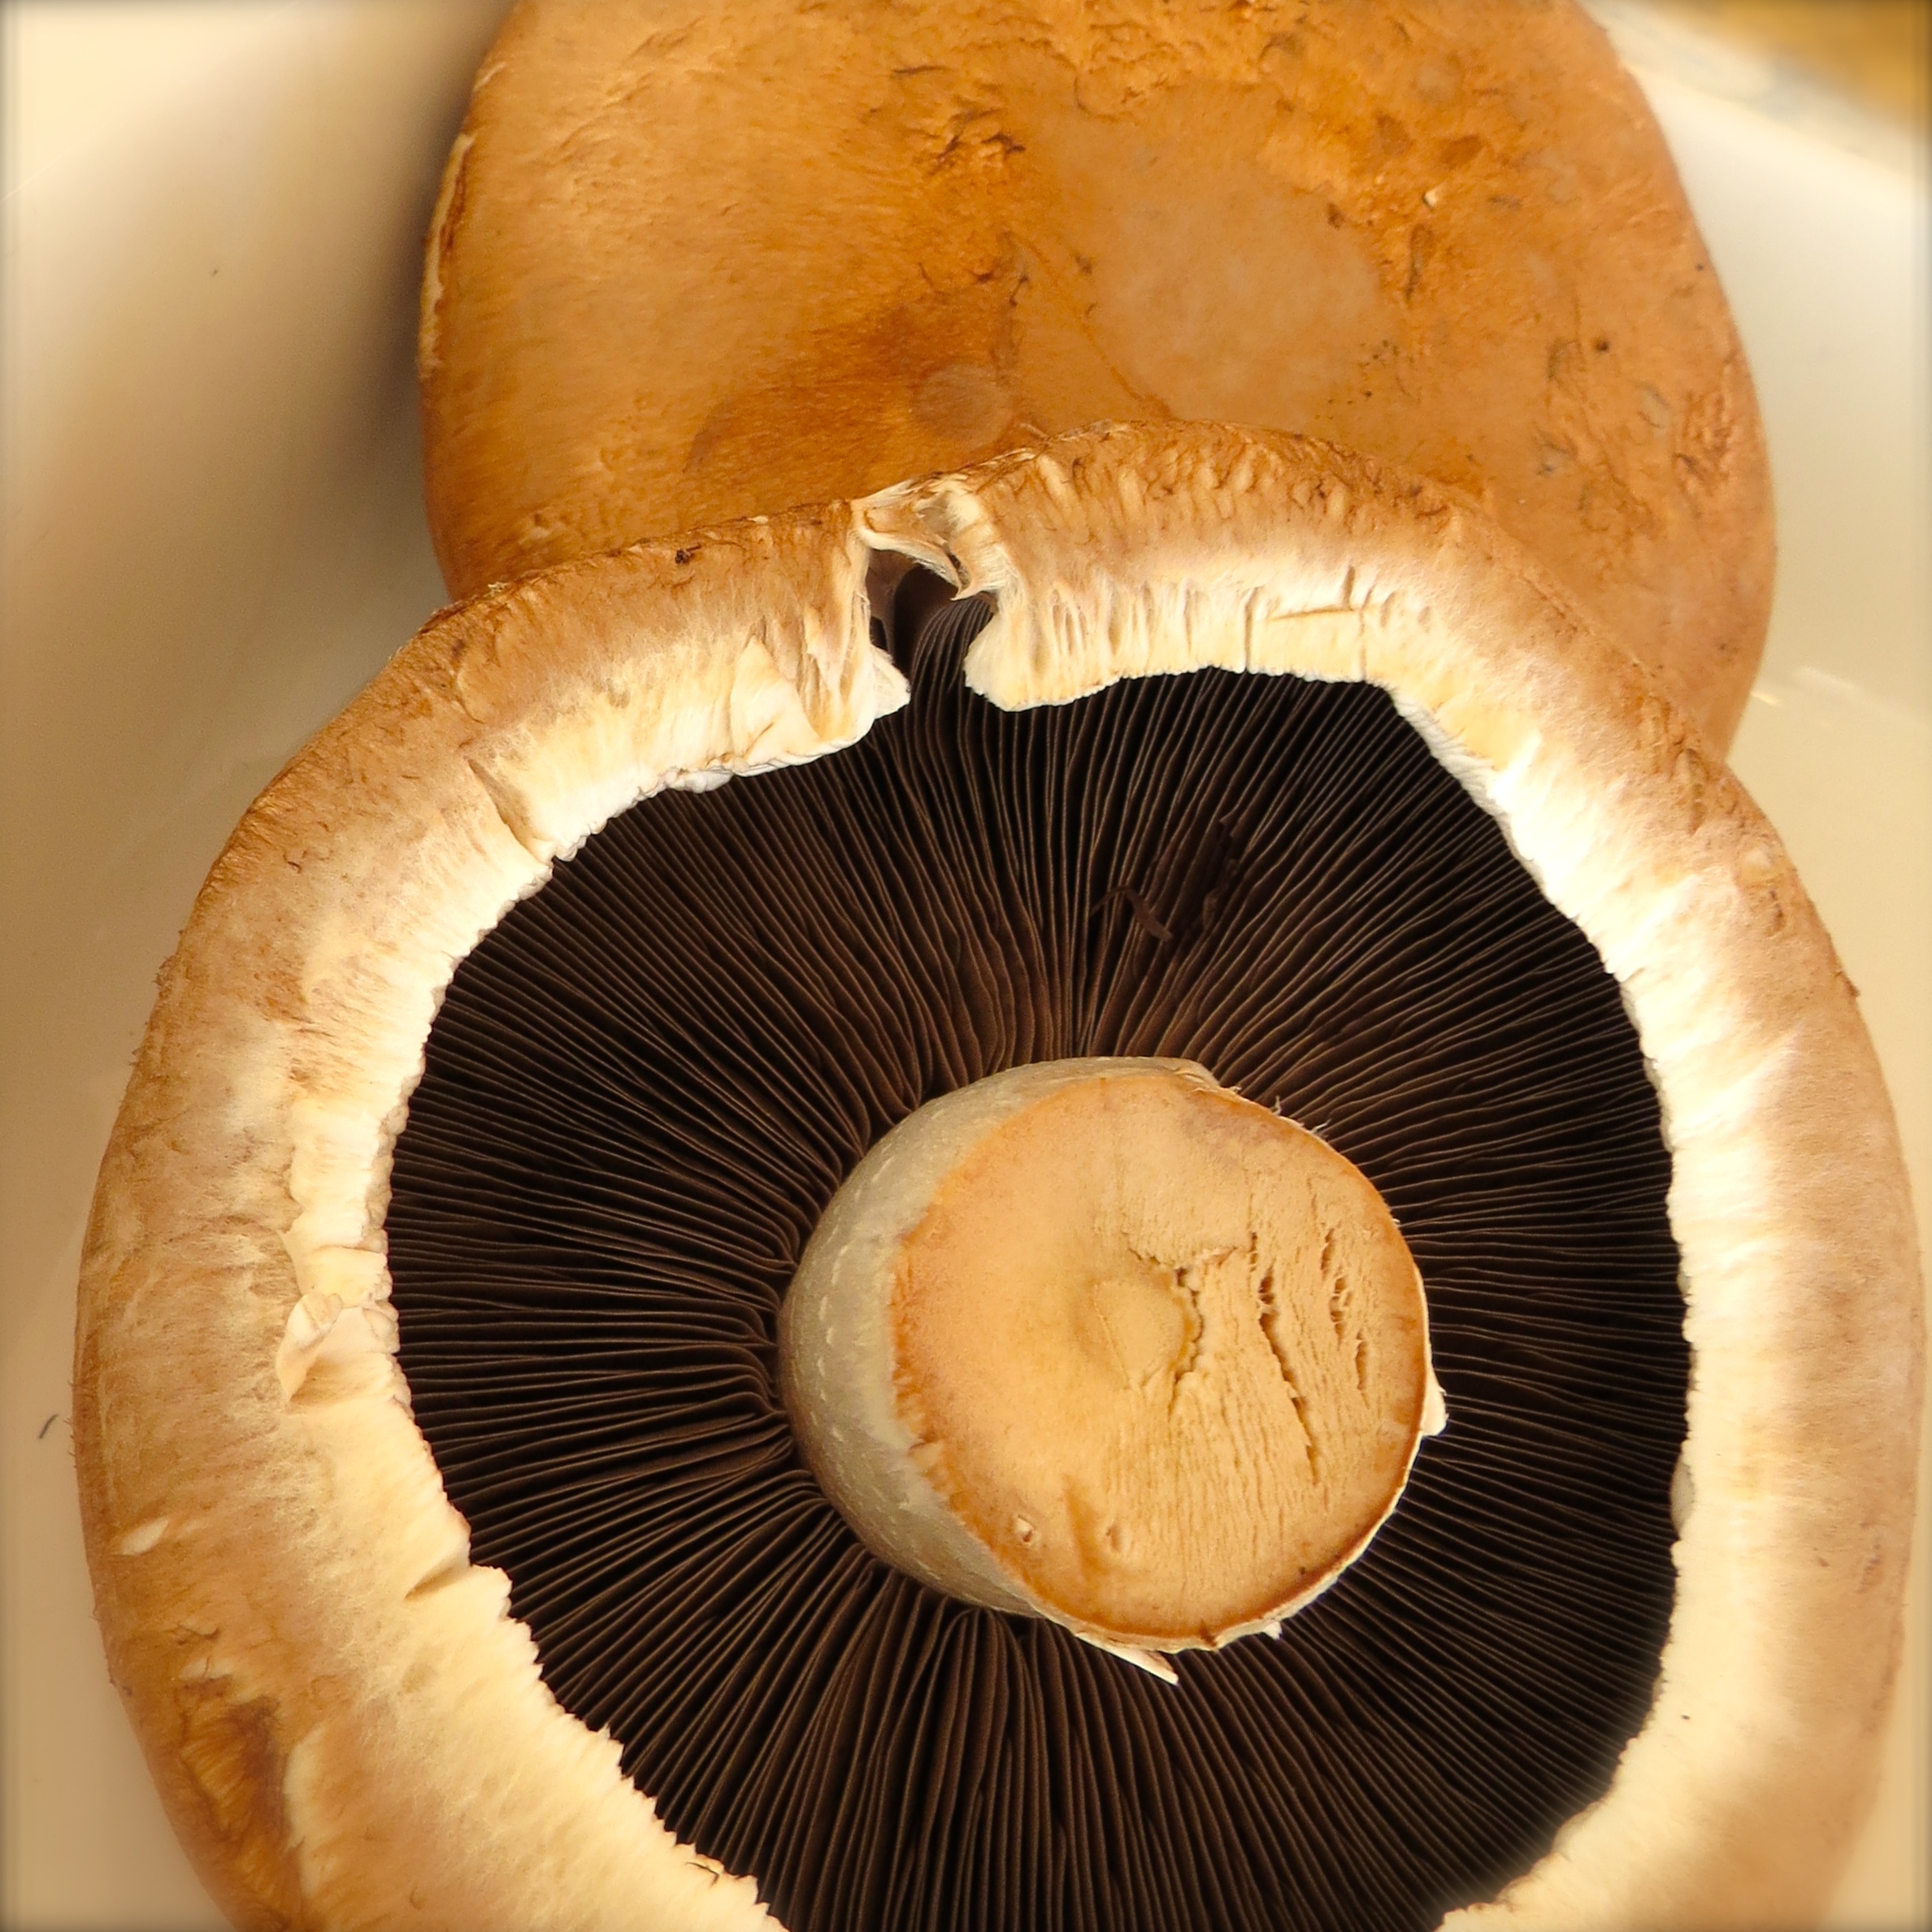 Portobellos, my fungi choice for Big Baked Mushrooms